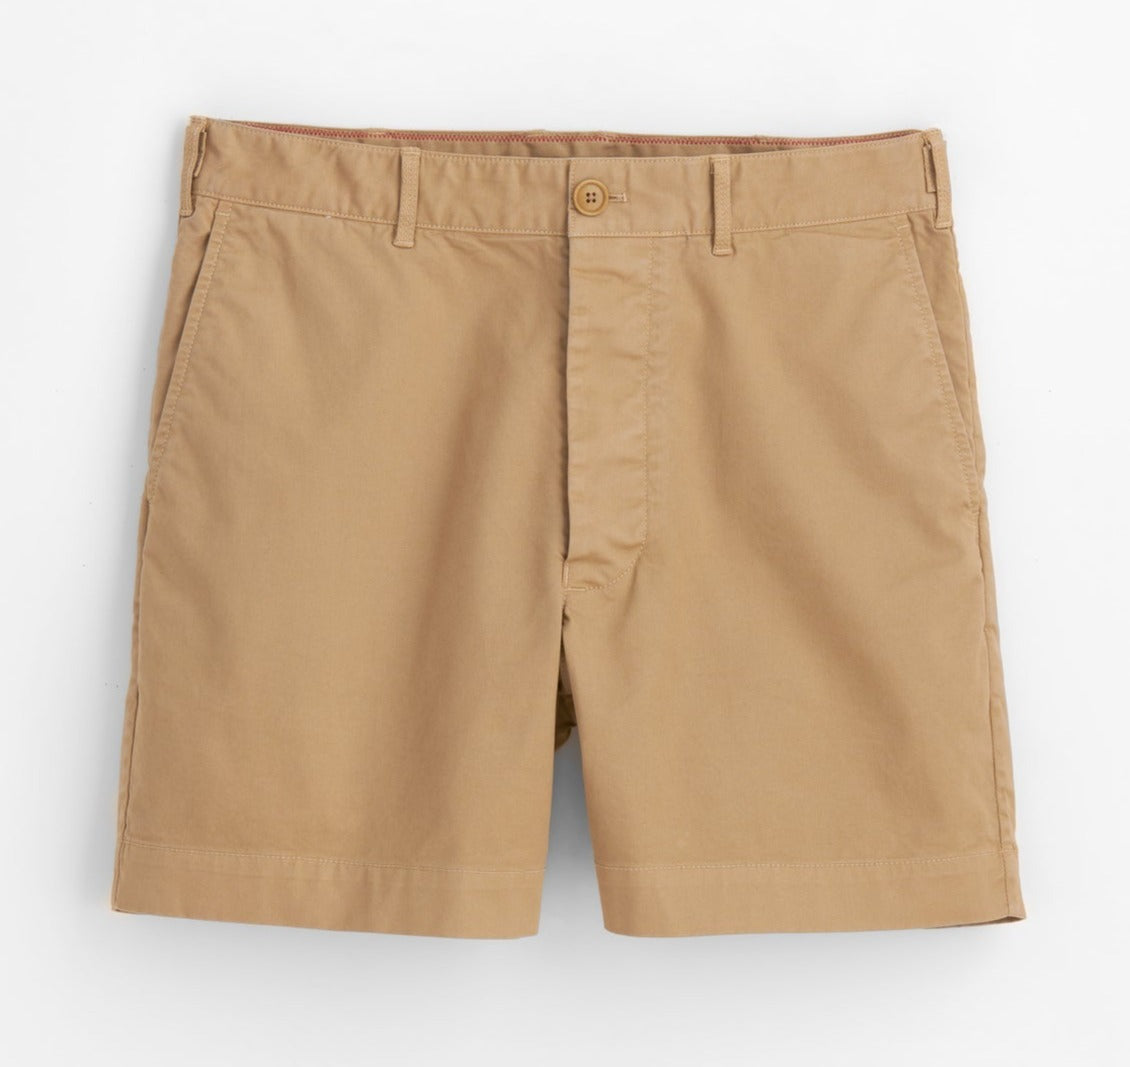 Shop Plain Chino Shorts Online